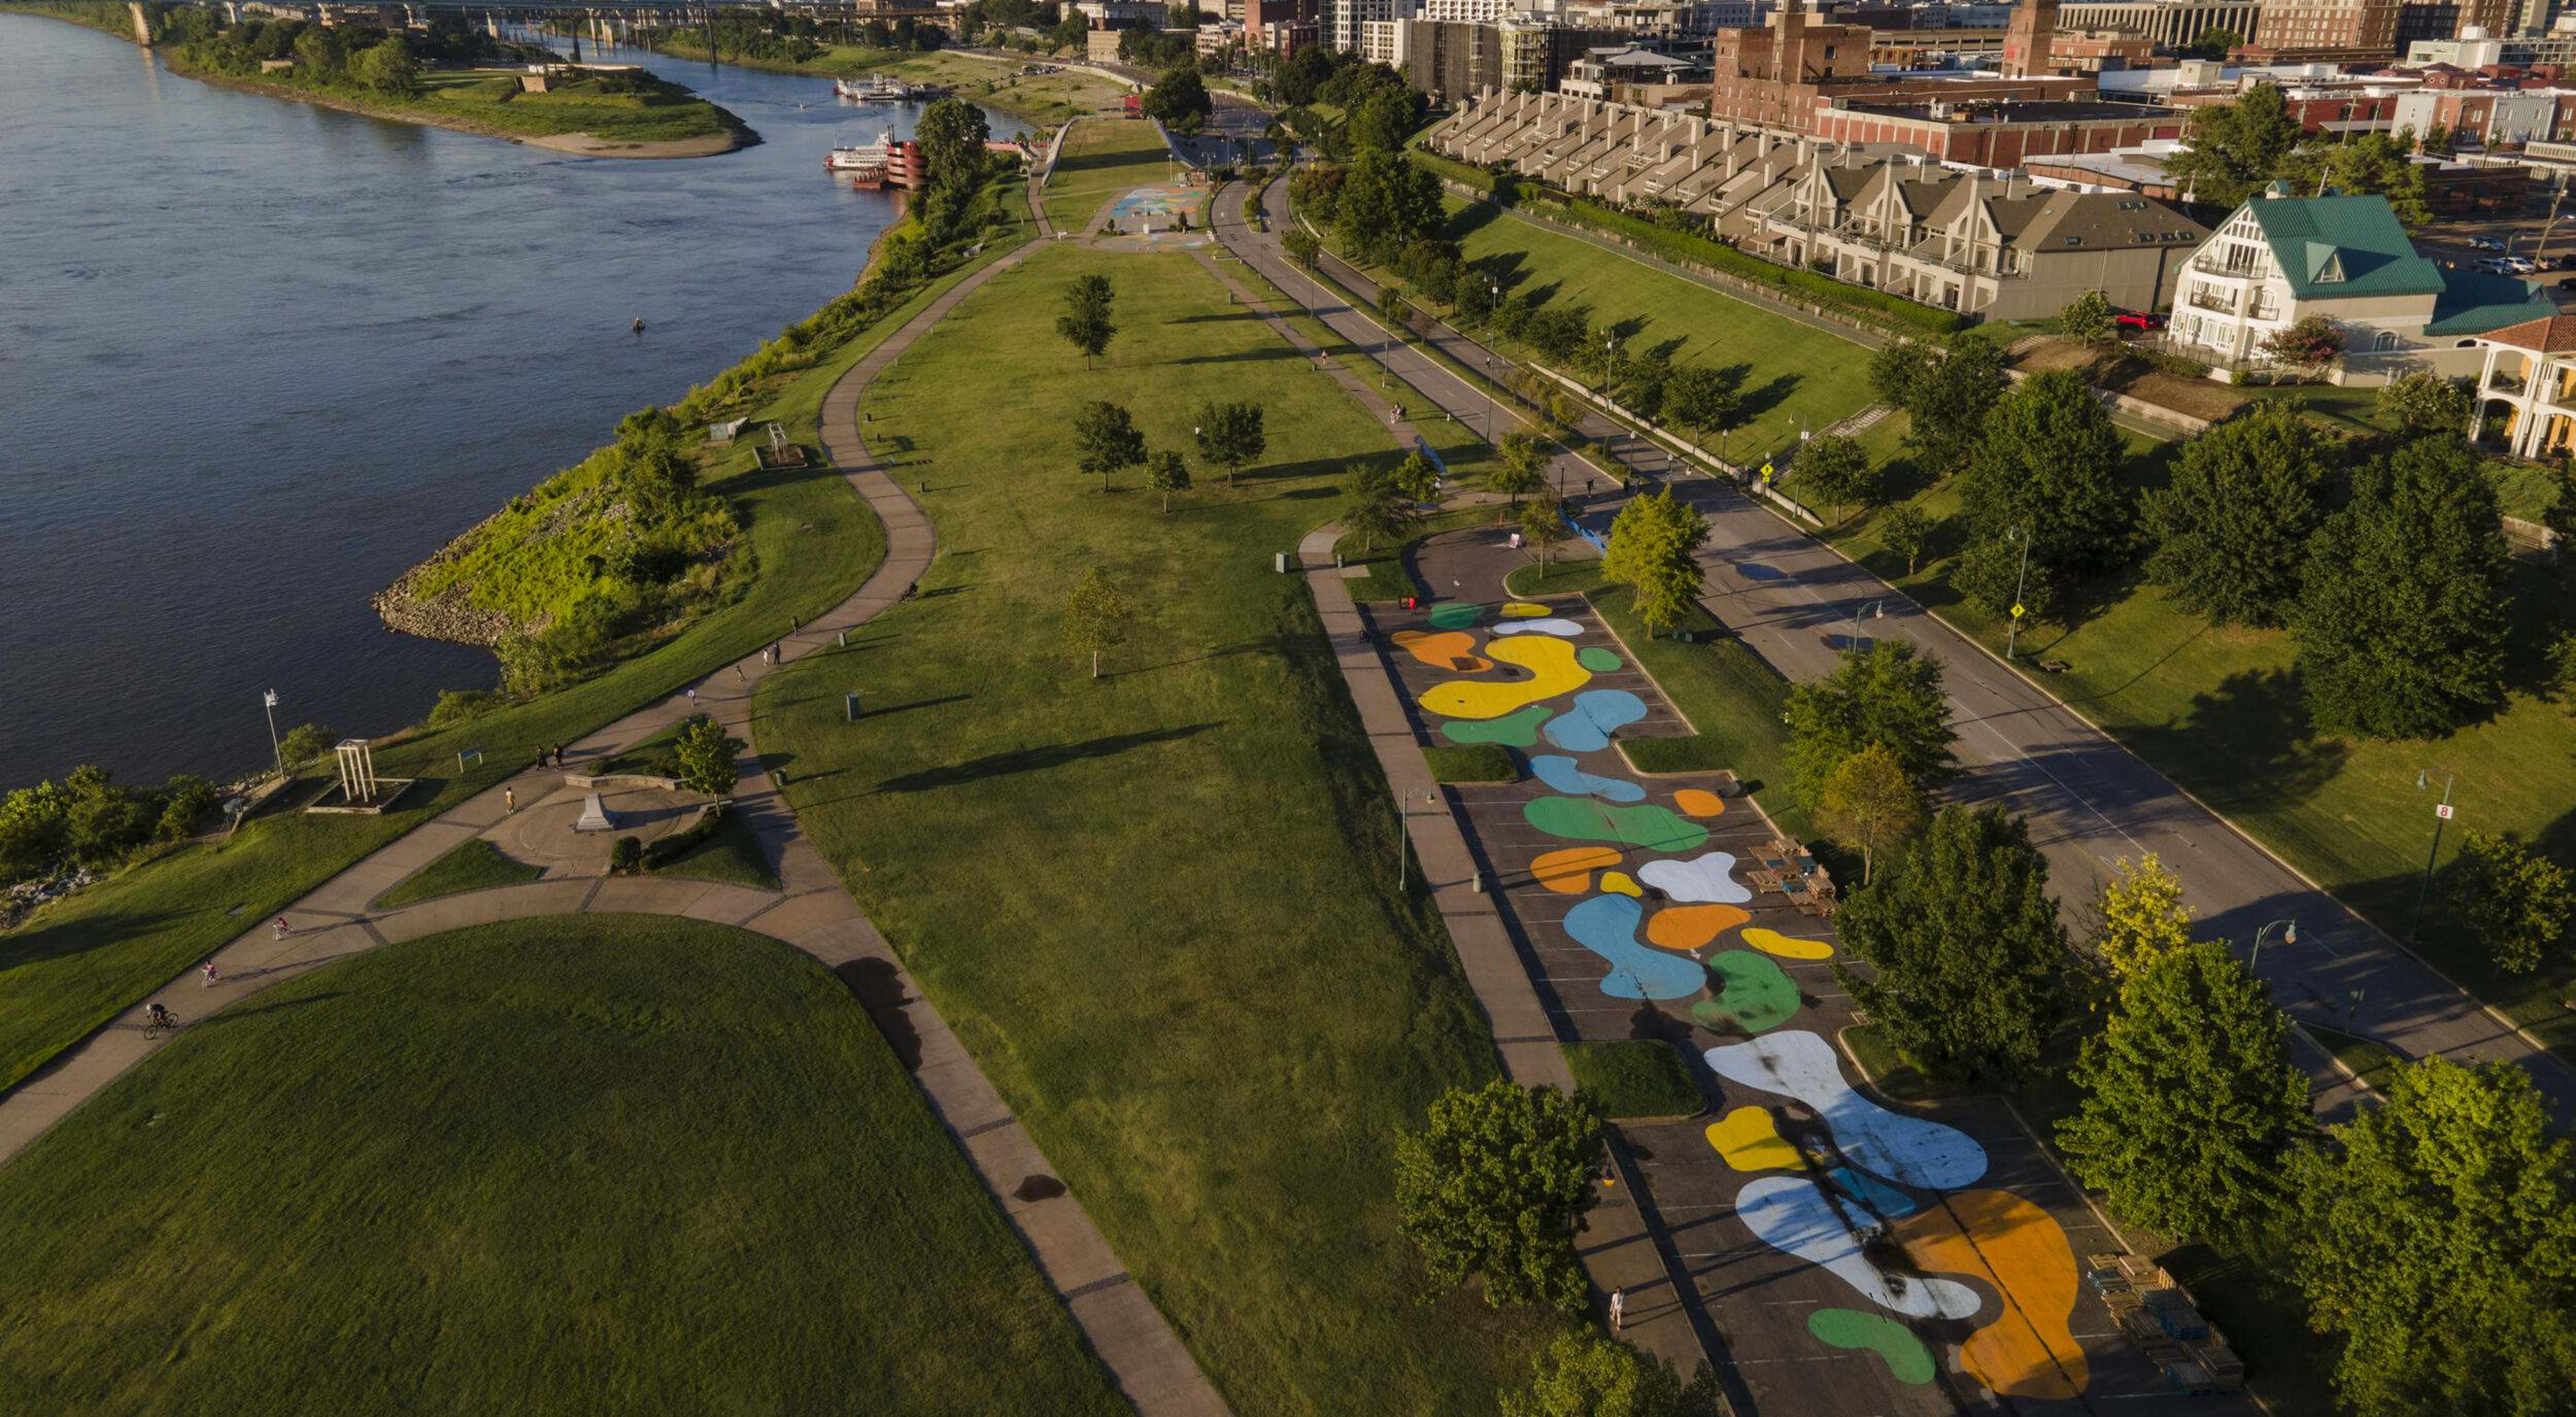 Aerial view of a city park alongside a river.